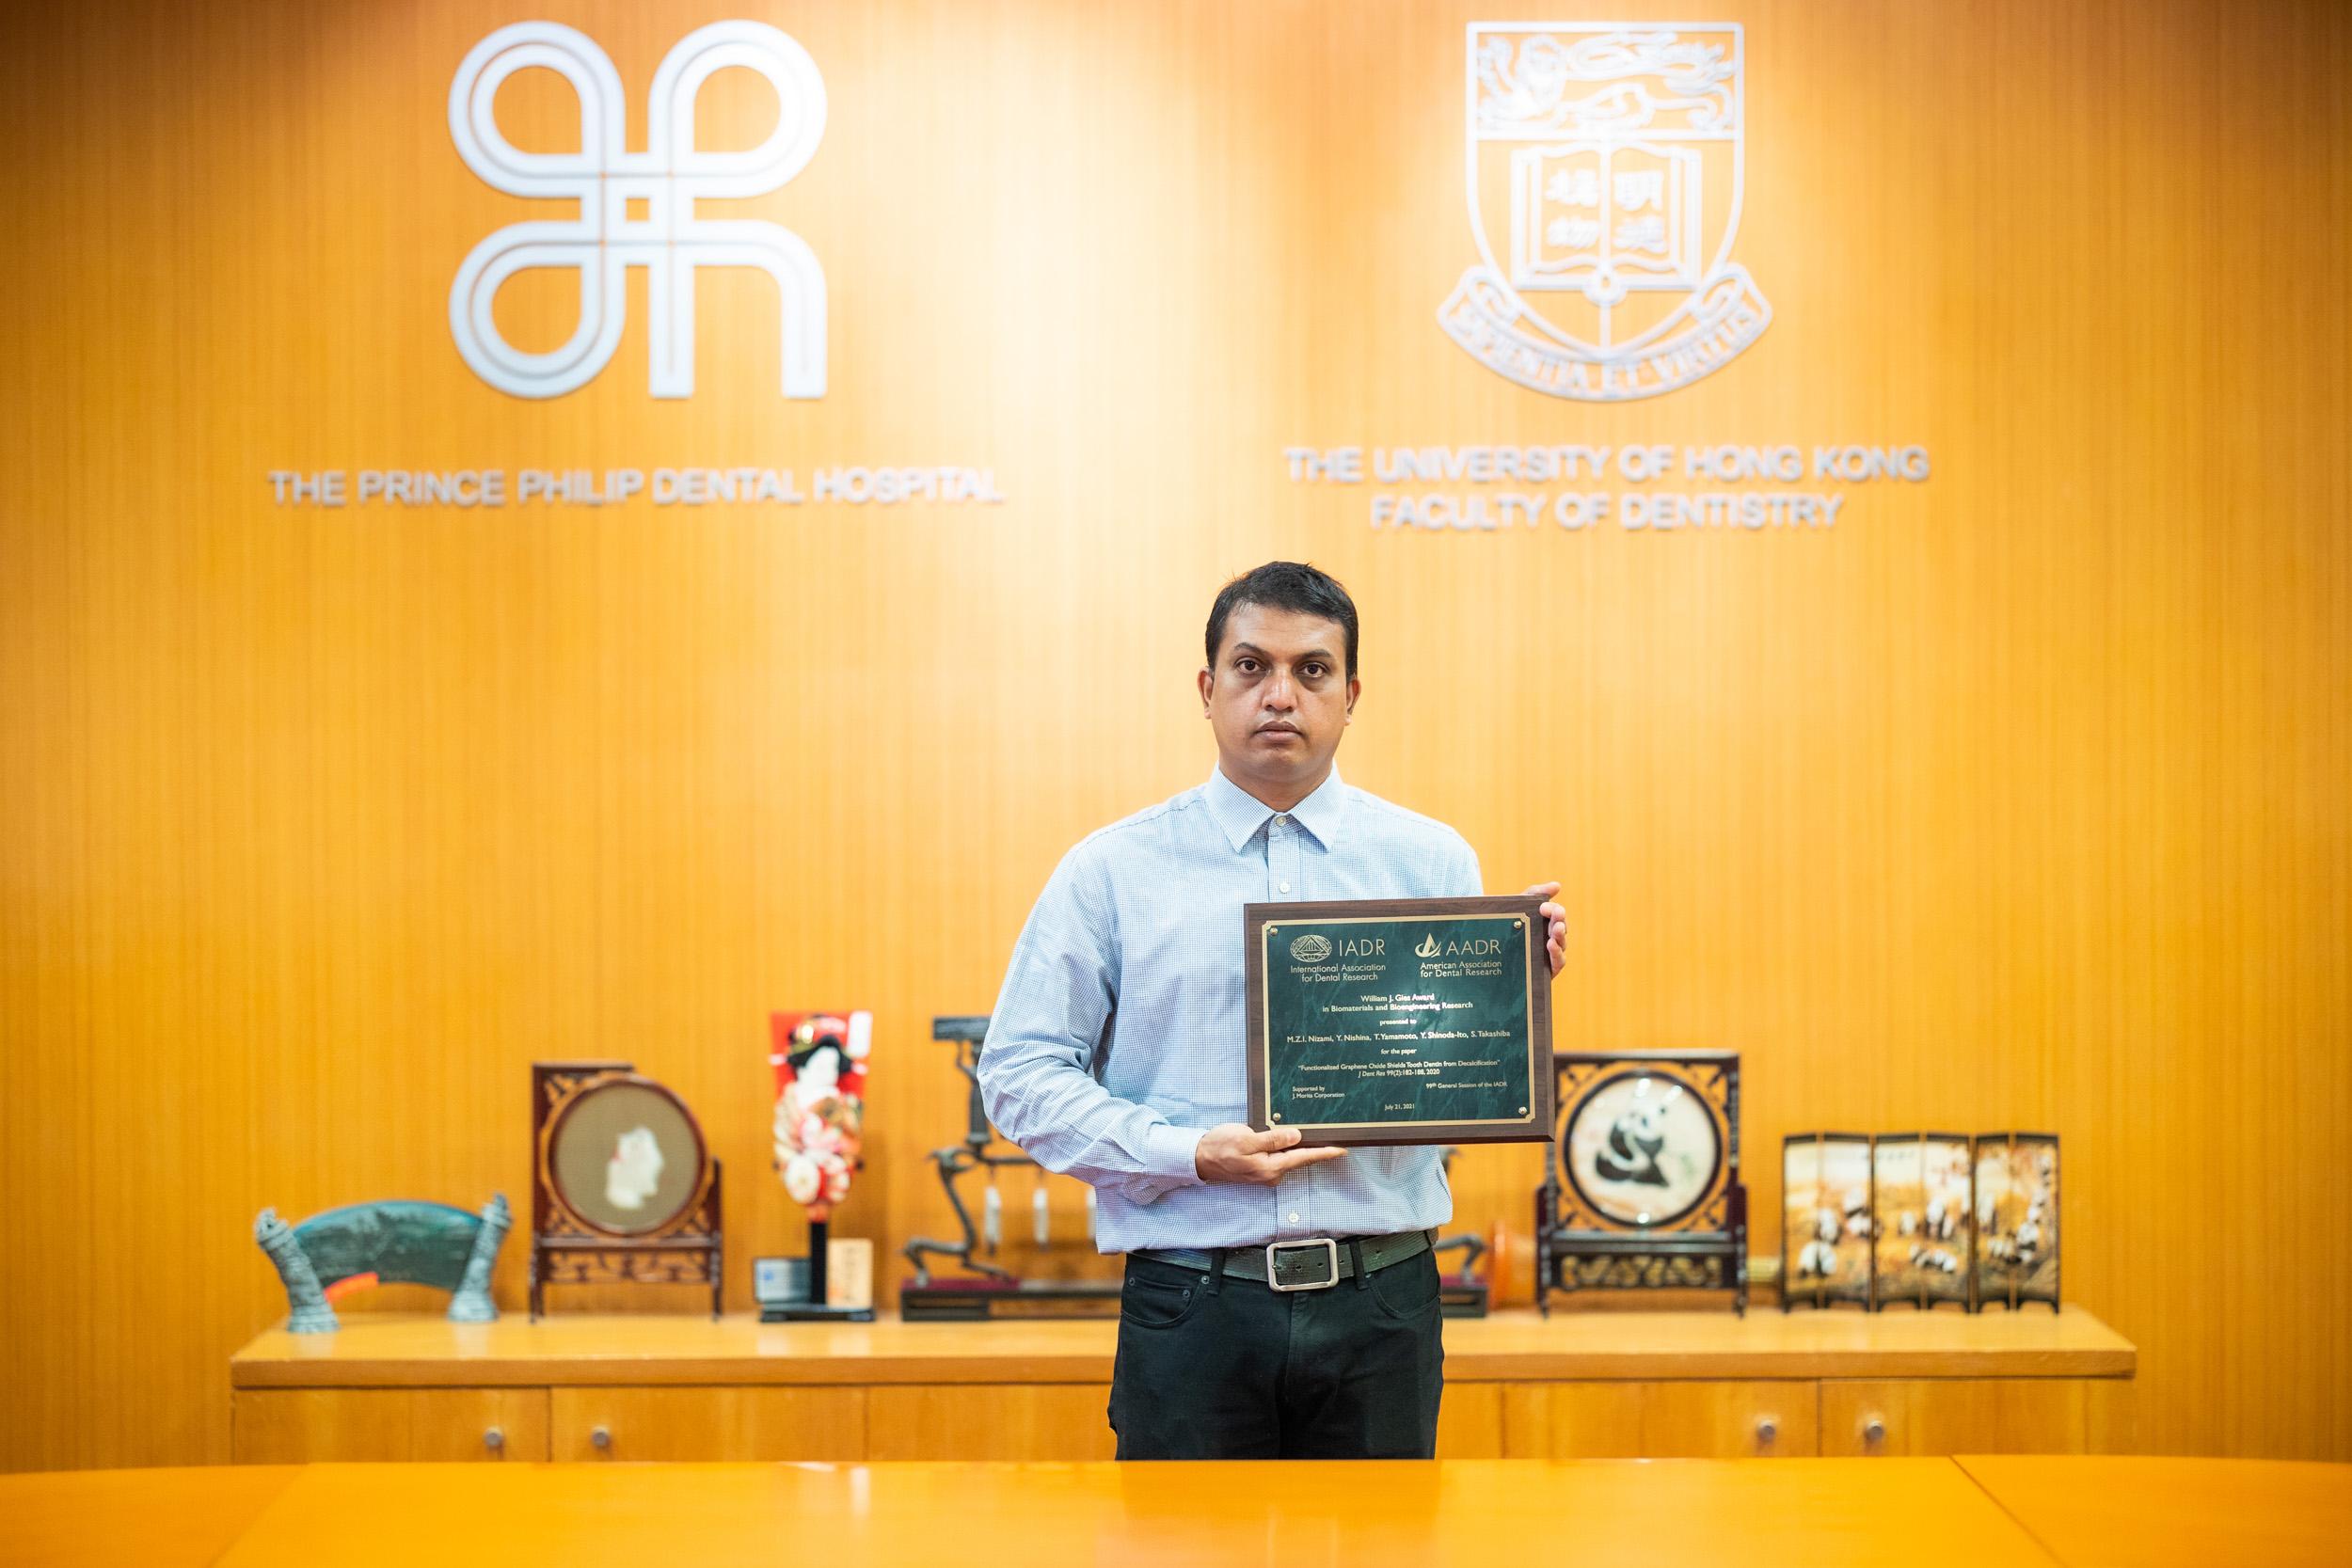 Mohammed Zehedul Islam Nizami 博士 - 香港大学牙科学院成员荣获国际牙科研究协会 (IADR) 颁发的著名奖项